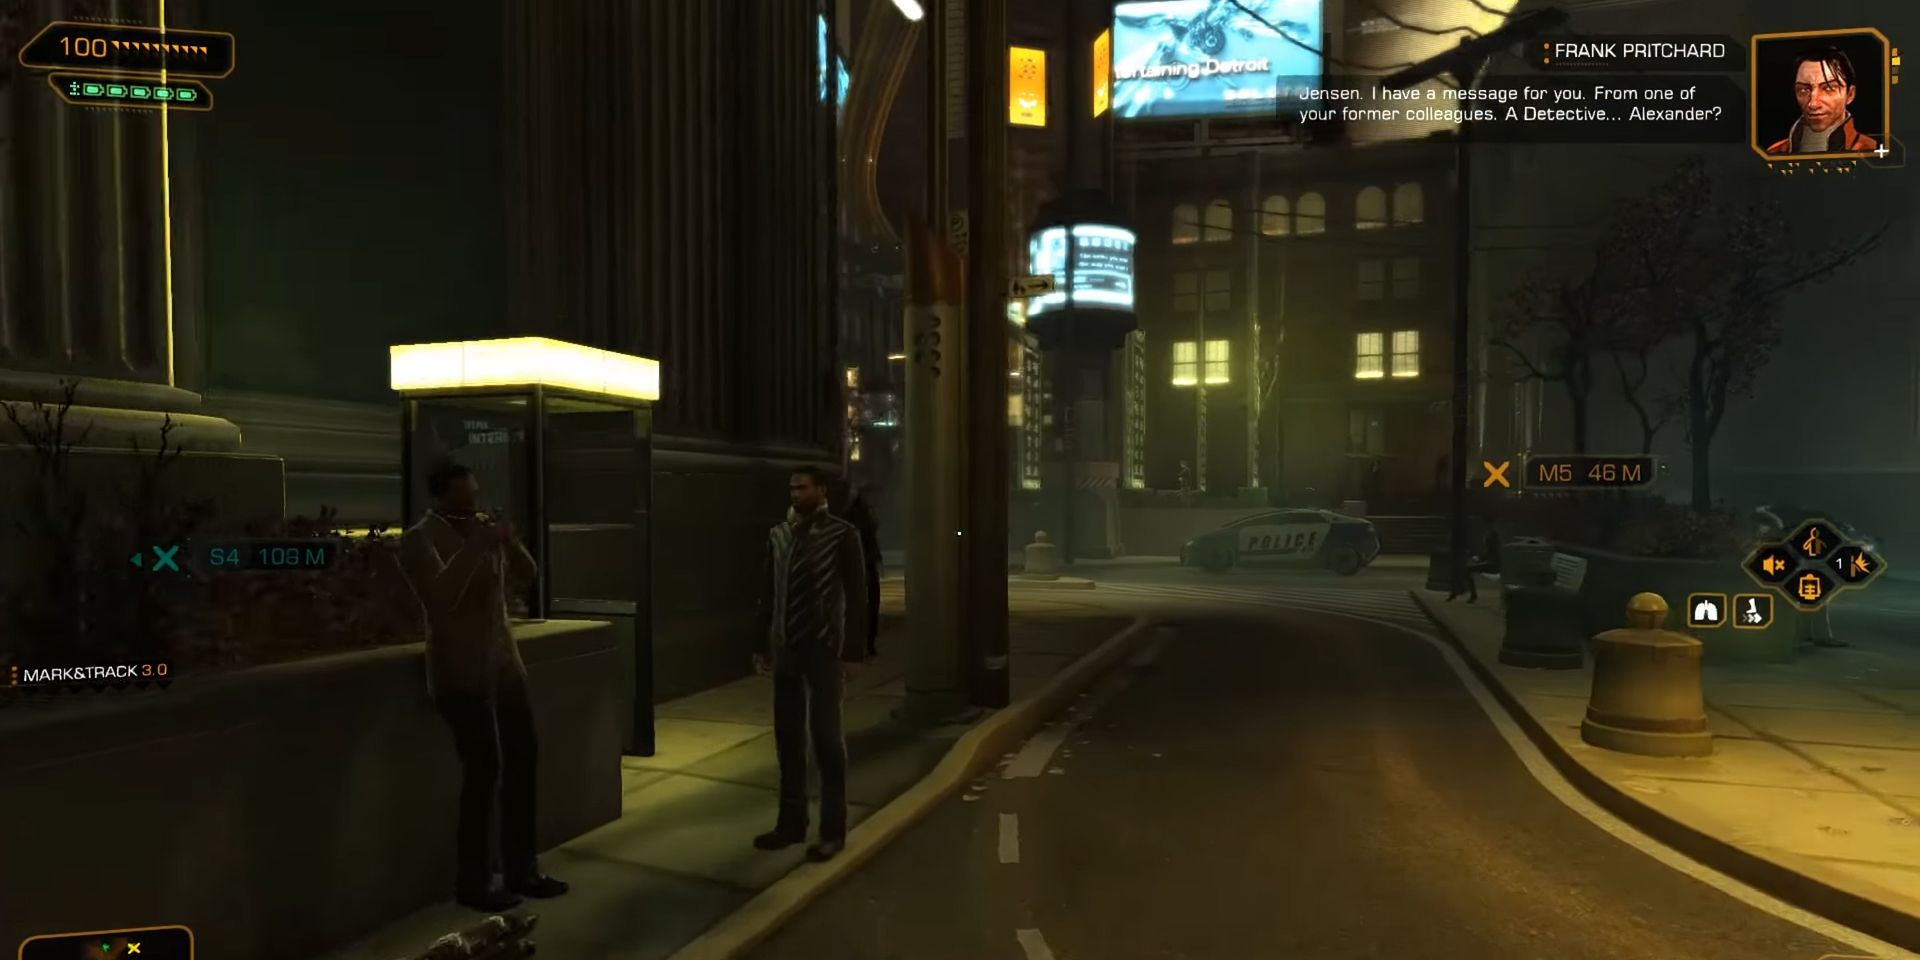 A screenshot showing Detroit area gameplay in Deus Ex: Human Revolution